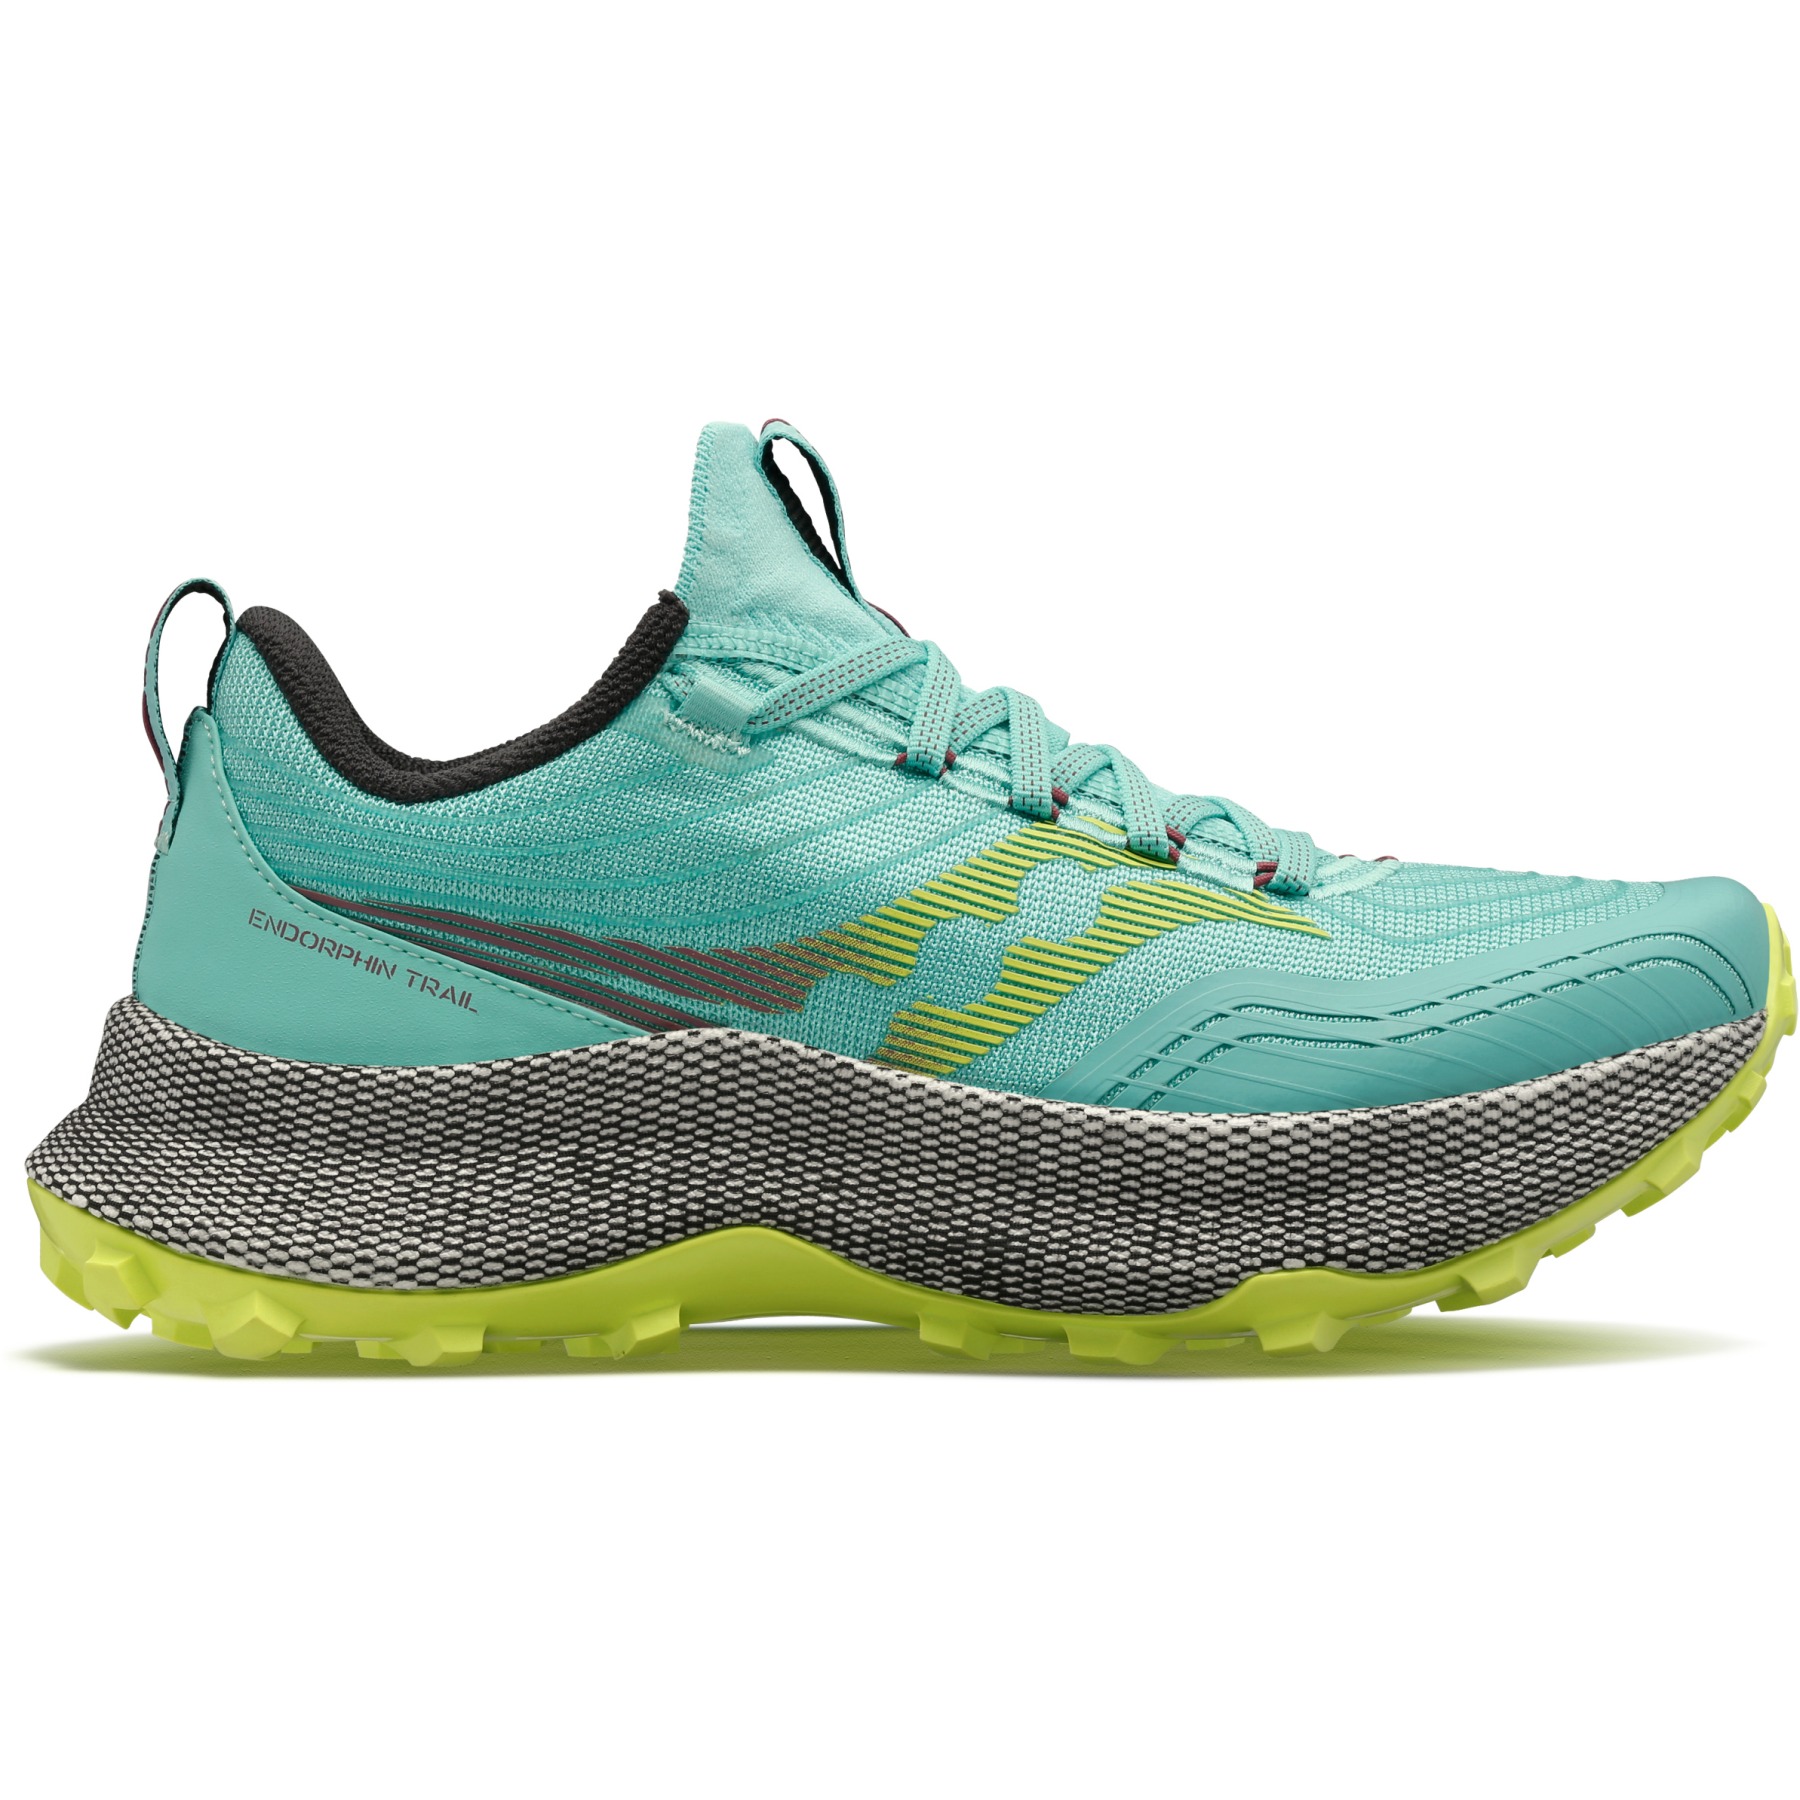 Productfoto van Saucony Endorphin Trail Women&#039;s Trail Running Shoes - cool mint/acid